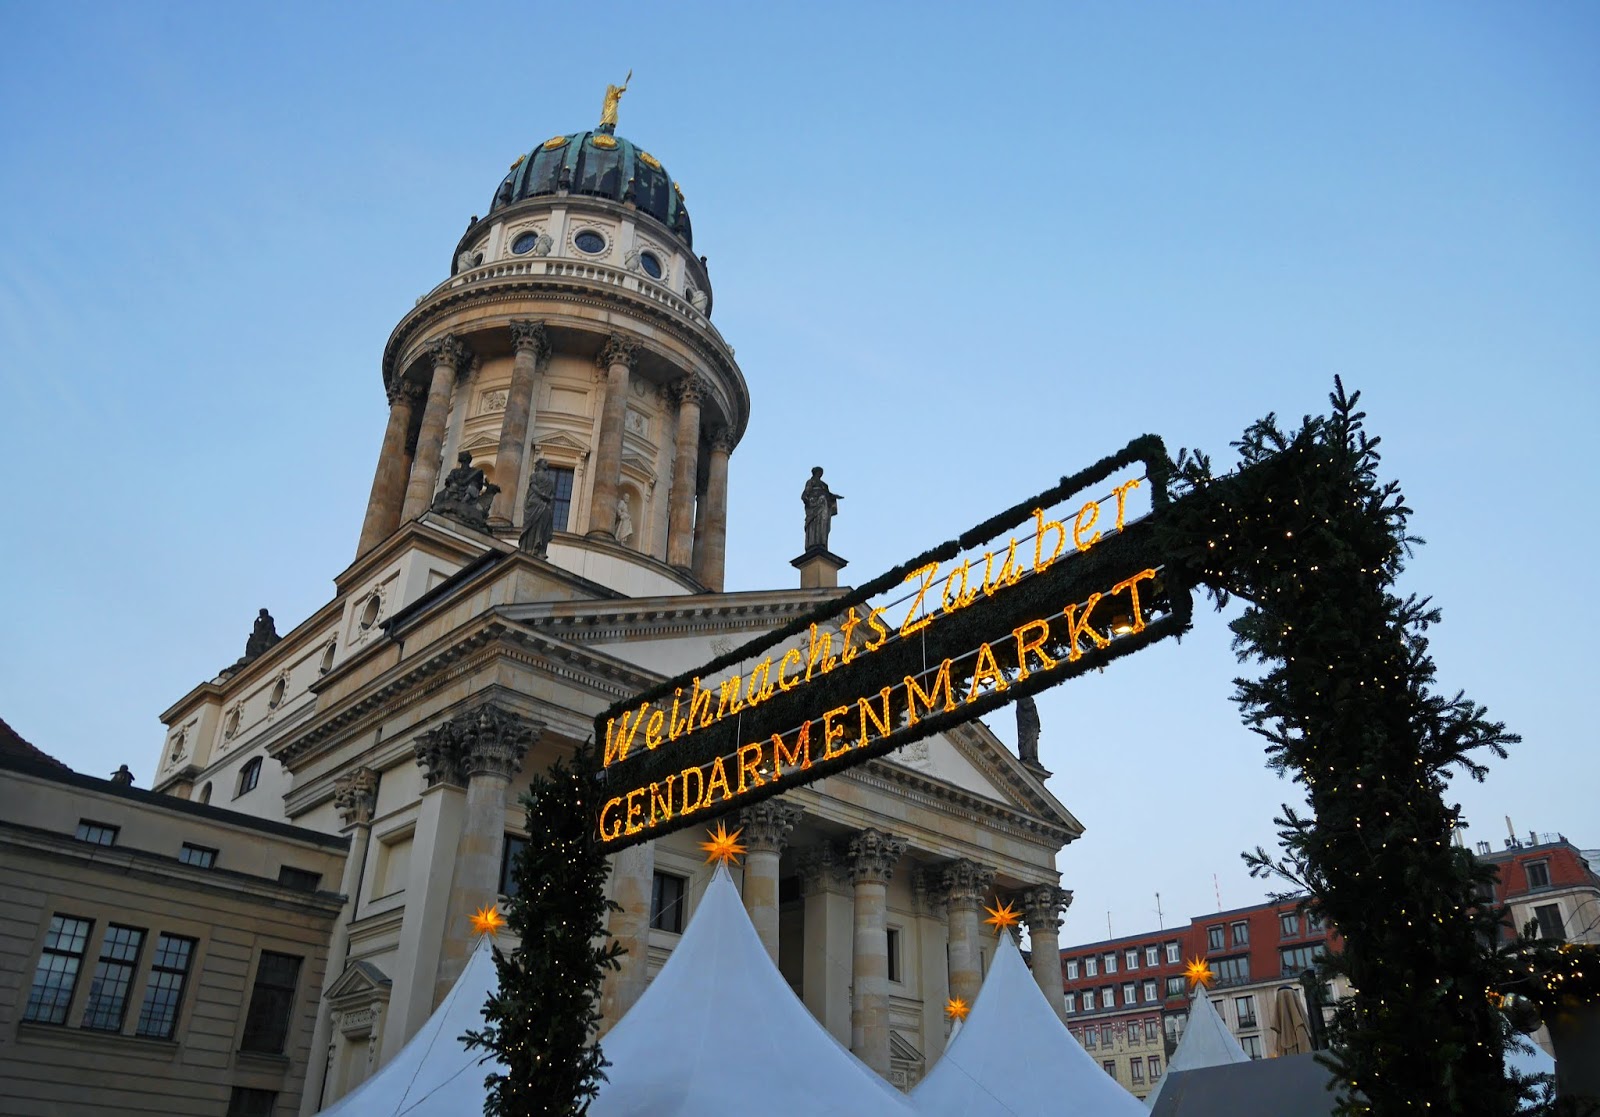 The Christmas Market at the Gendarmenmarkt, Berlin